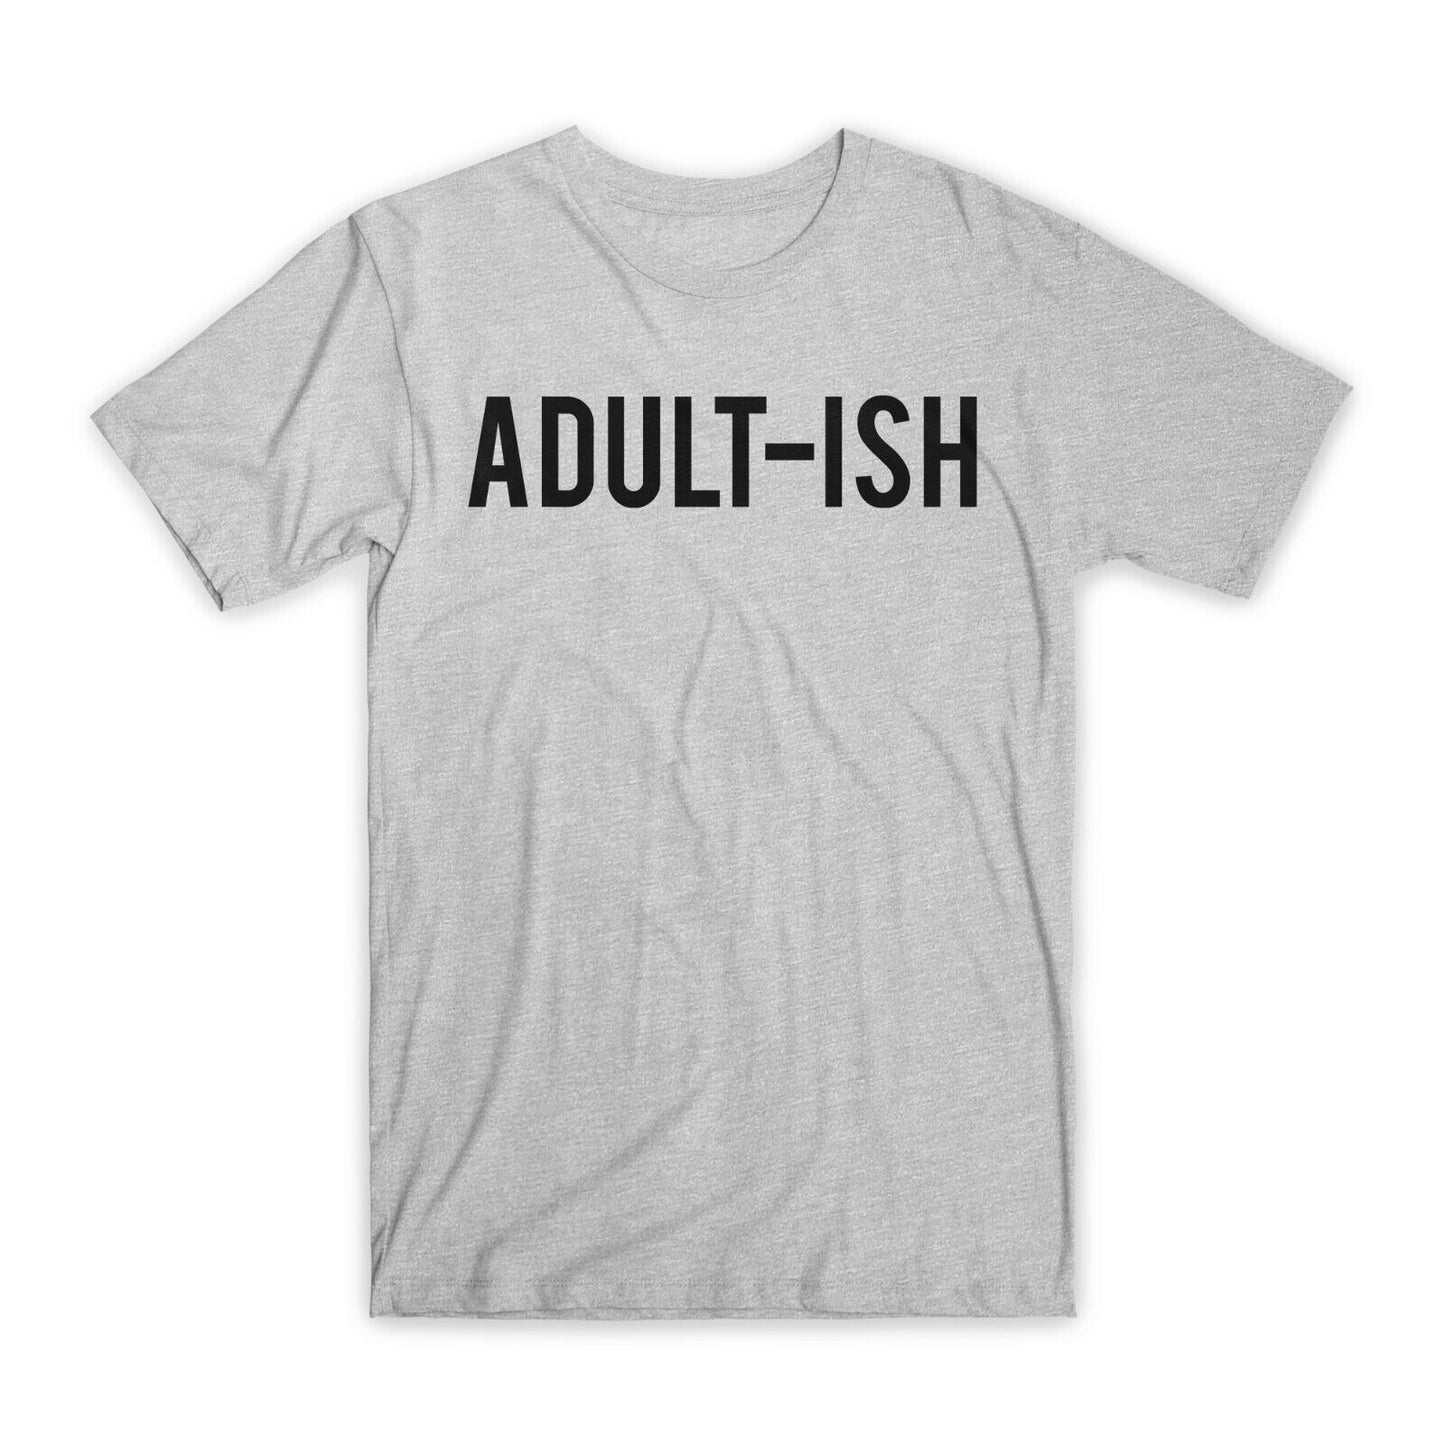 Adult-Ish Print T-Shirt Premium Soft Cotton Crew Neck Funny Tee Novelty Gift NEW